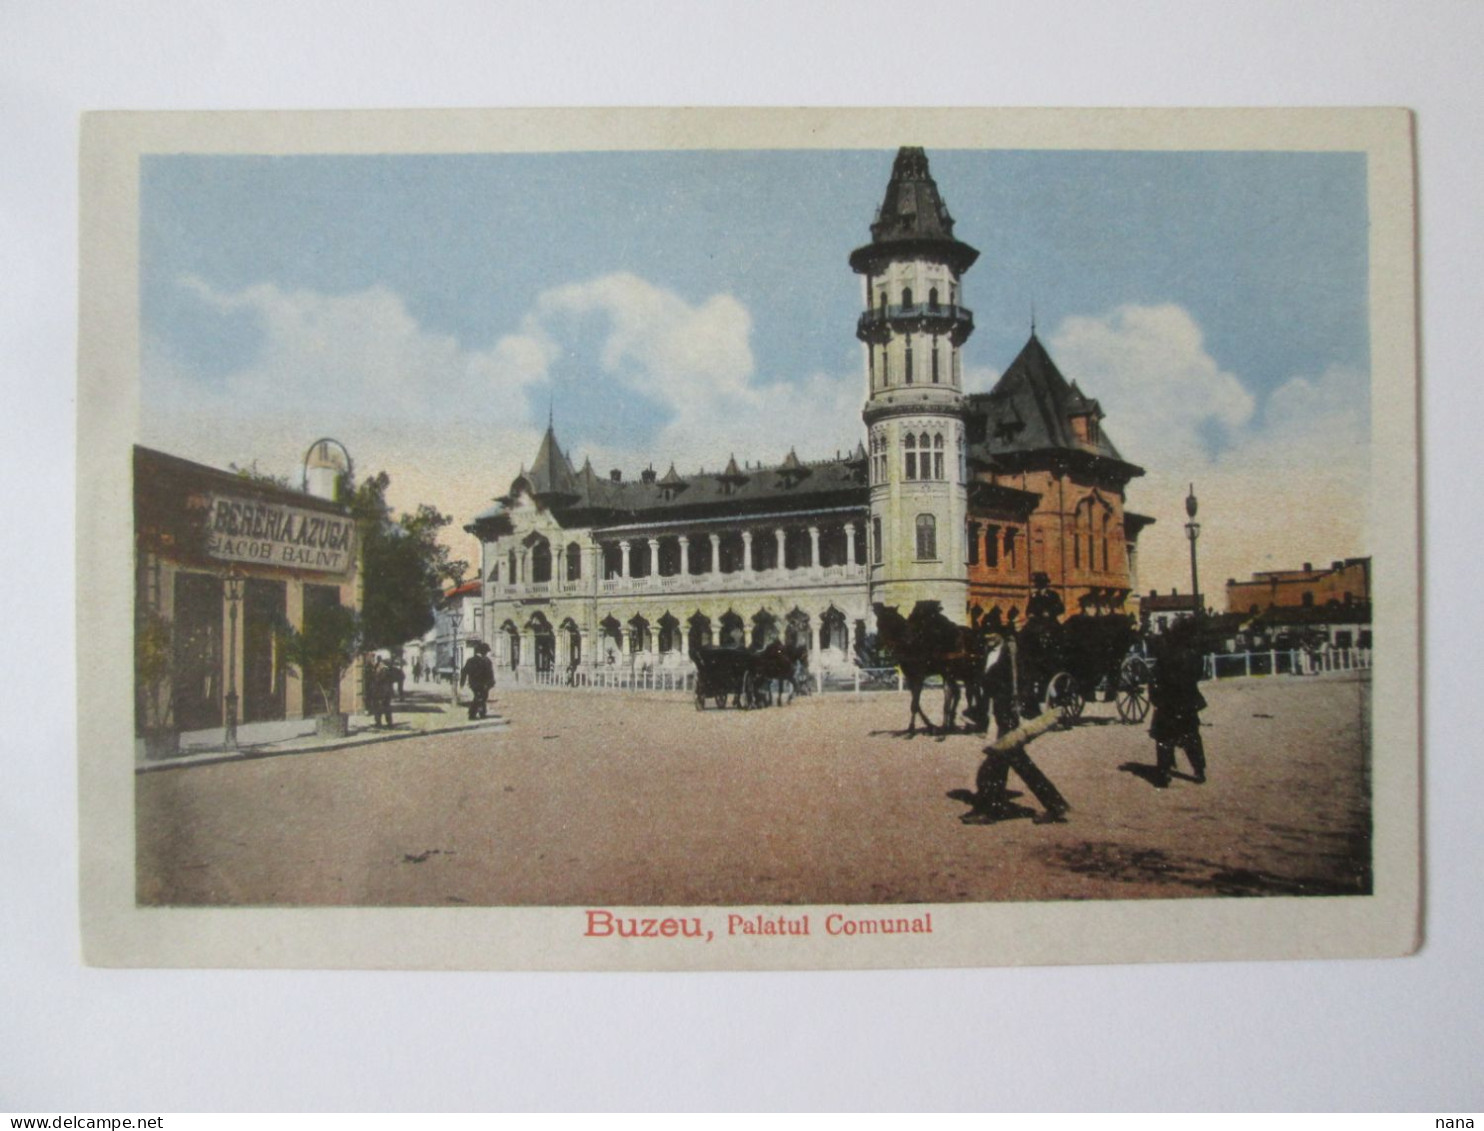 Romania-Buzău:Brasseria Azuga Carte Postale Vers 1915/Azuga Brewery Unused Postcard About 1915 - Romania